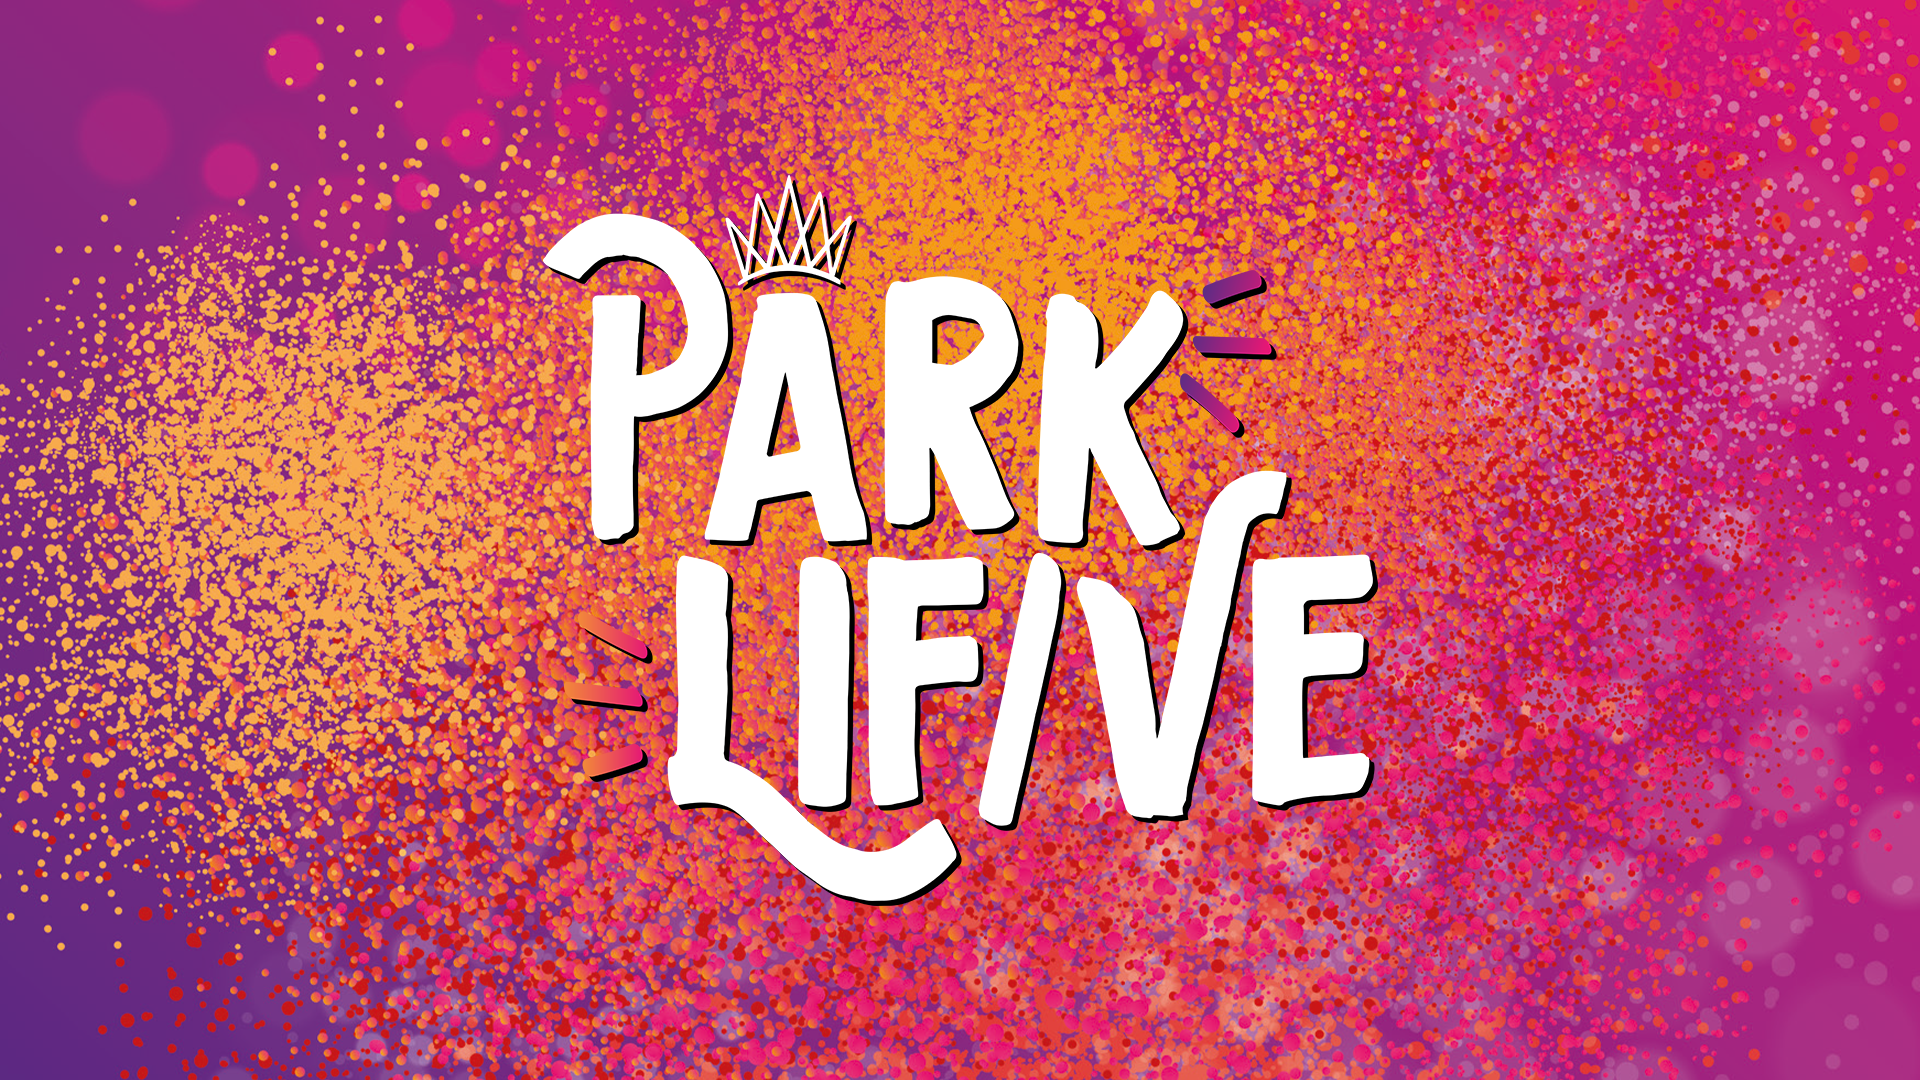 Parklif/ve Festival keert terug naar park achter Theater Koningshof!